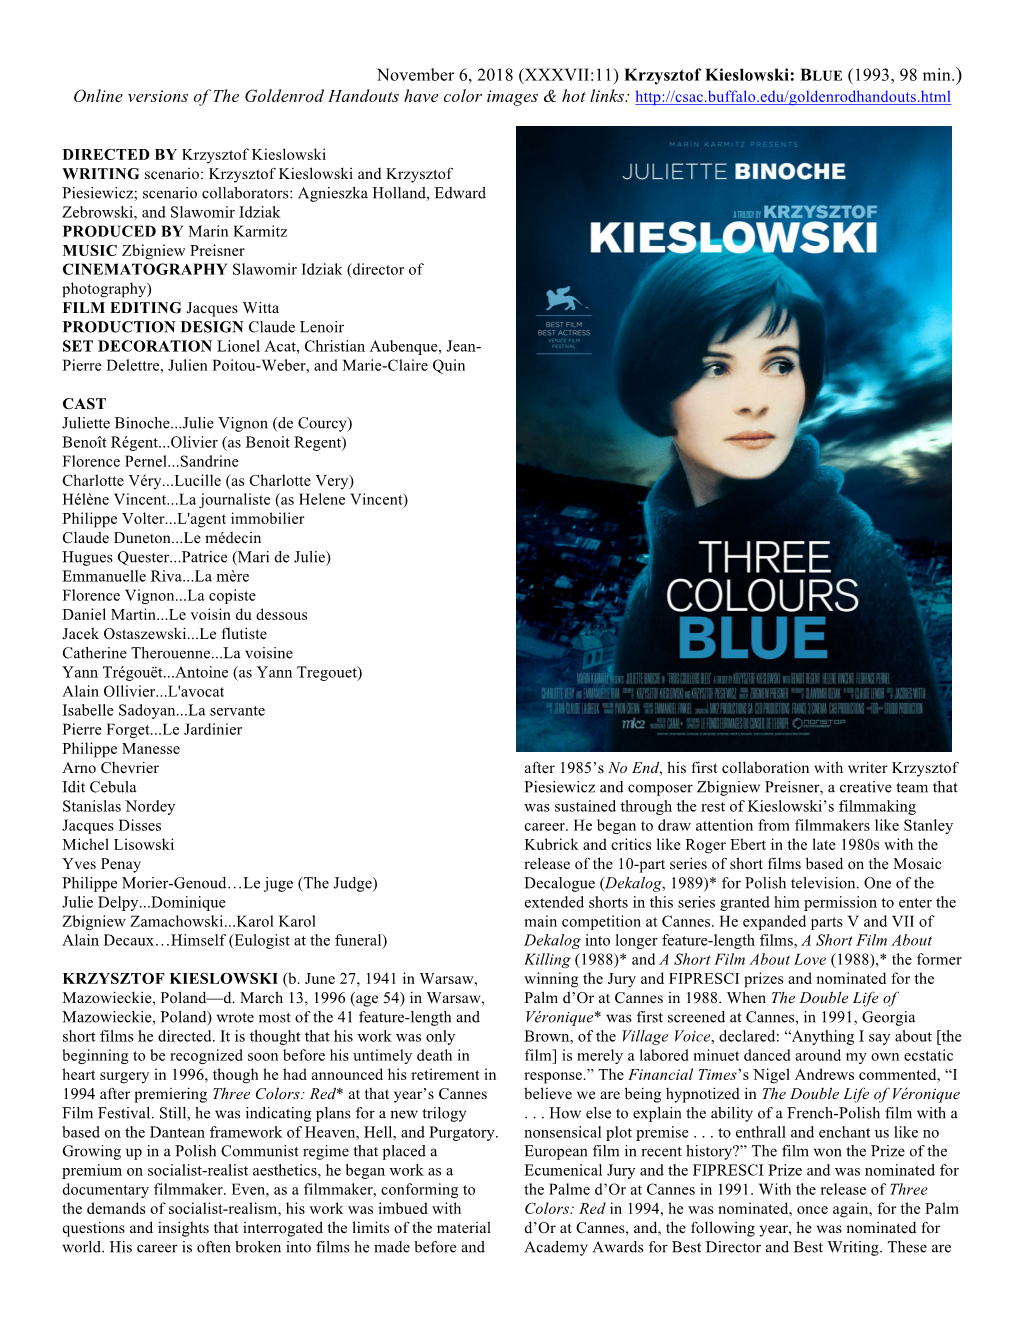 Krzysztof Kieslowski: BLUE (1993, 98 Min.) Online Versions of the Goldenrod Handouts Have Color Images & Hot Links